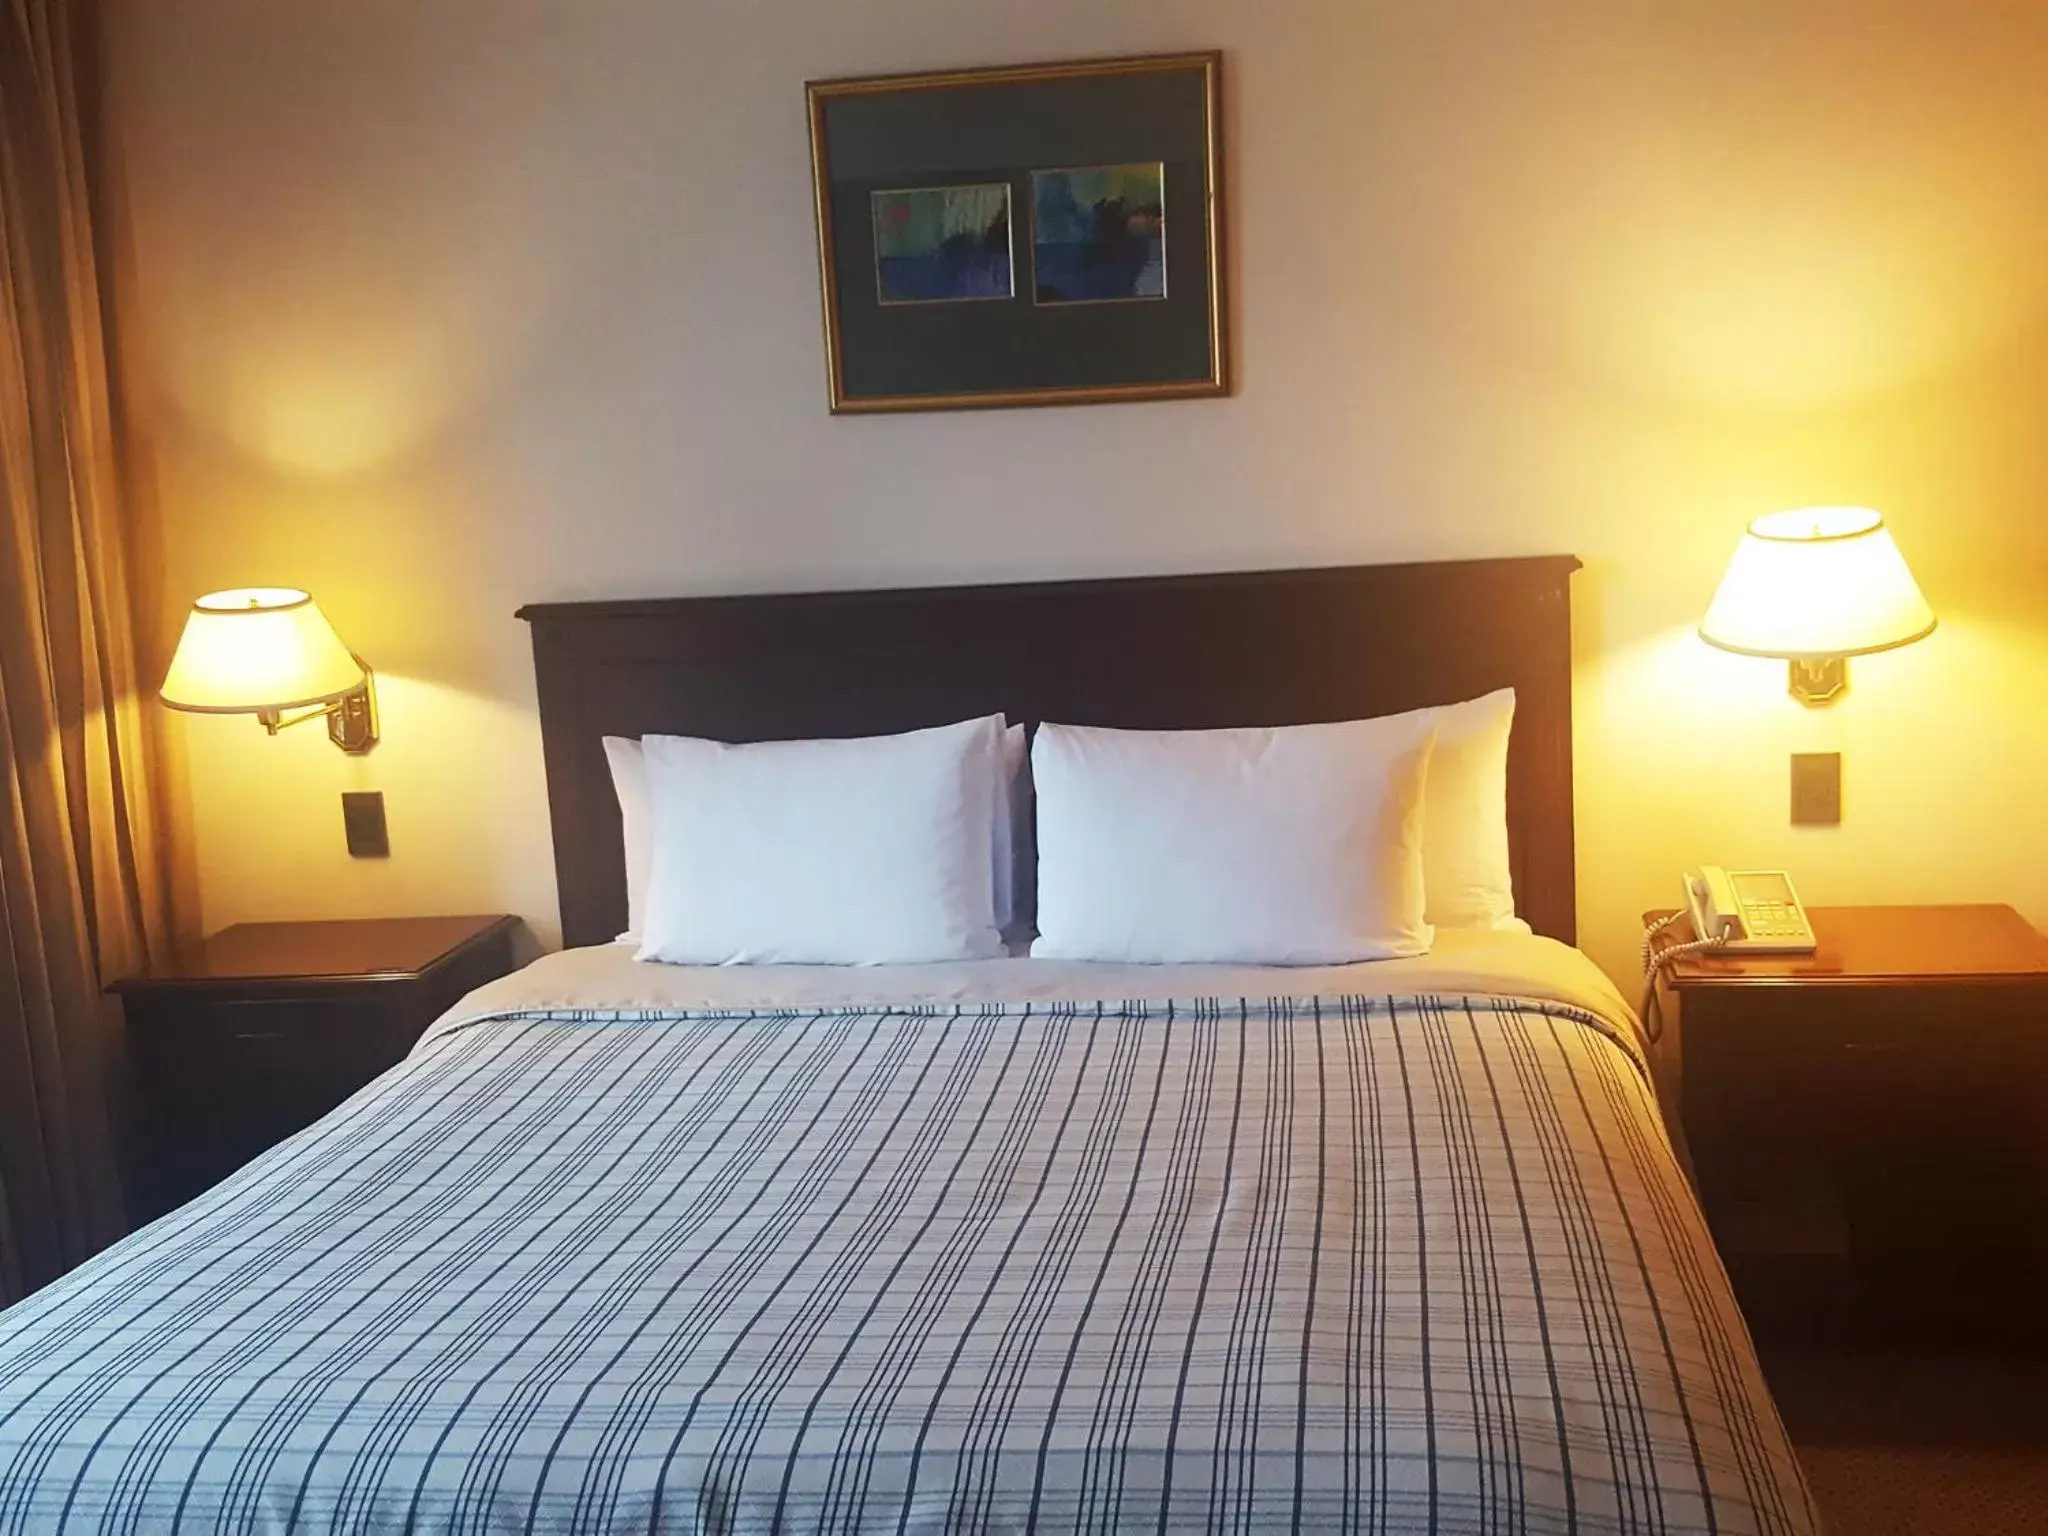 Bed, Room Photo in Hospedium Princess Hotel Panamá